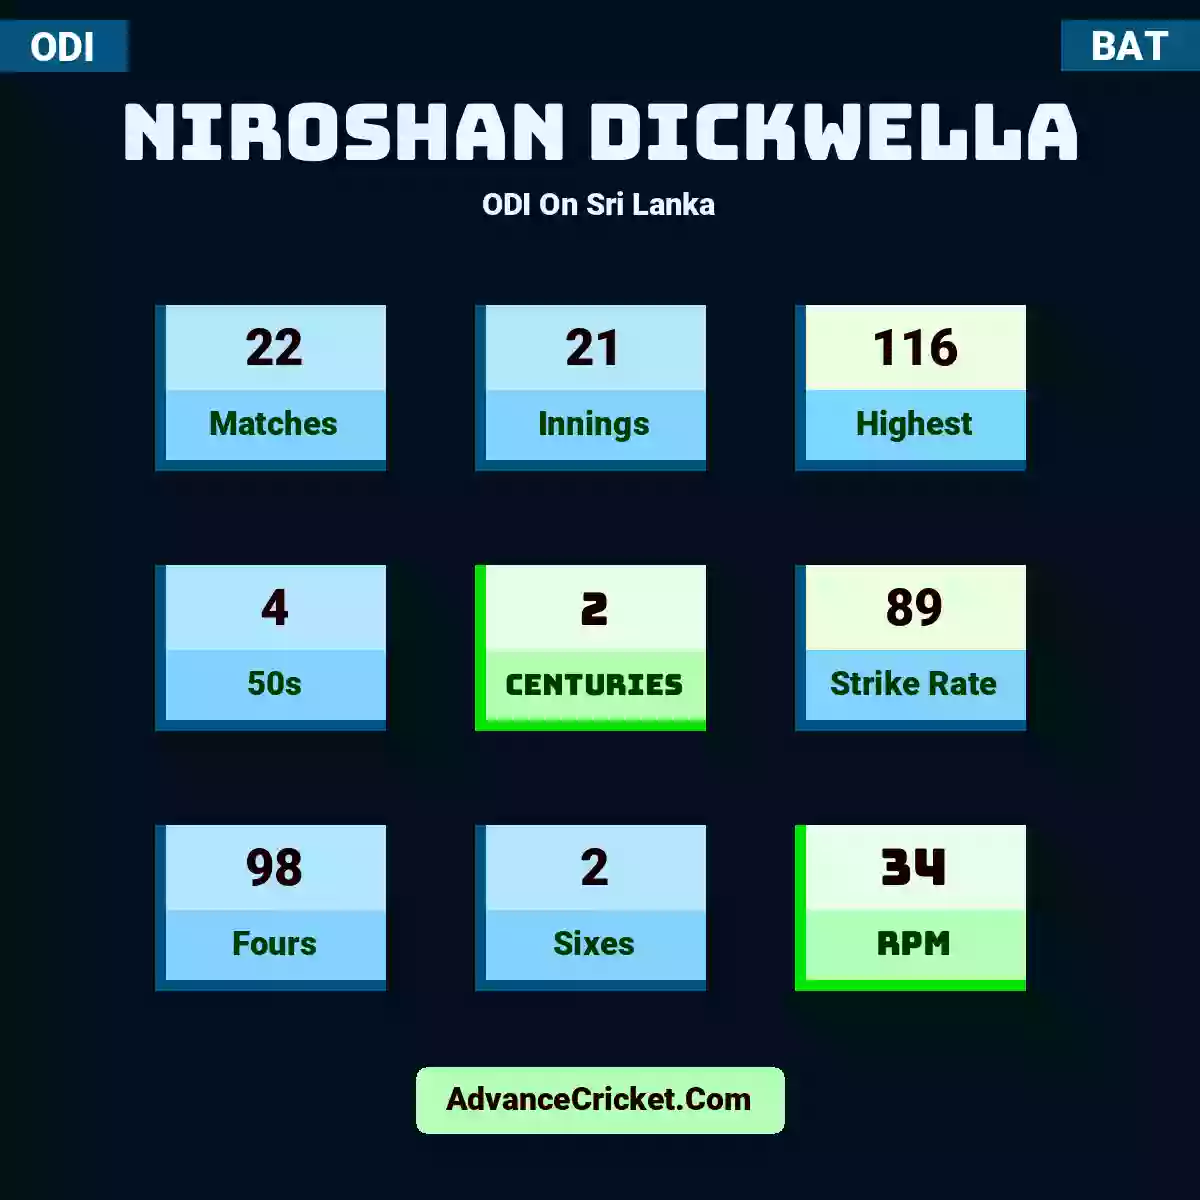 Niroshan Dickwella ODI  On Sri Lanka, Niroshan Dickwella played 22 matches, scored 116 runs as highest, 4 half-centuries, and 2 centuries, with a strike rate of 89. N.Dickwella hit 98 fours and 2 sixes, with an RPM of 34.